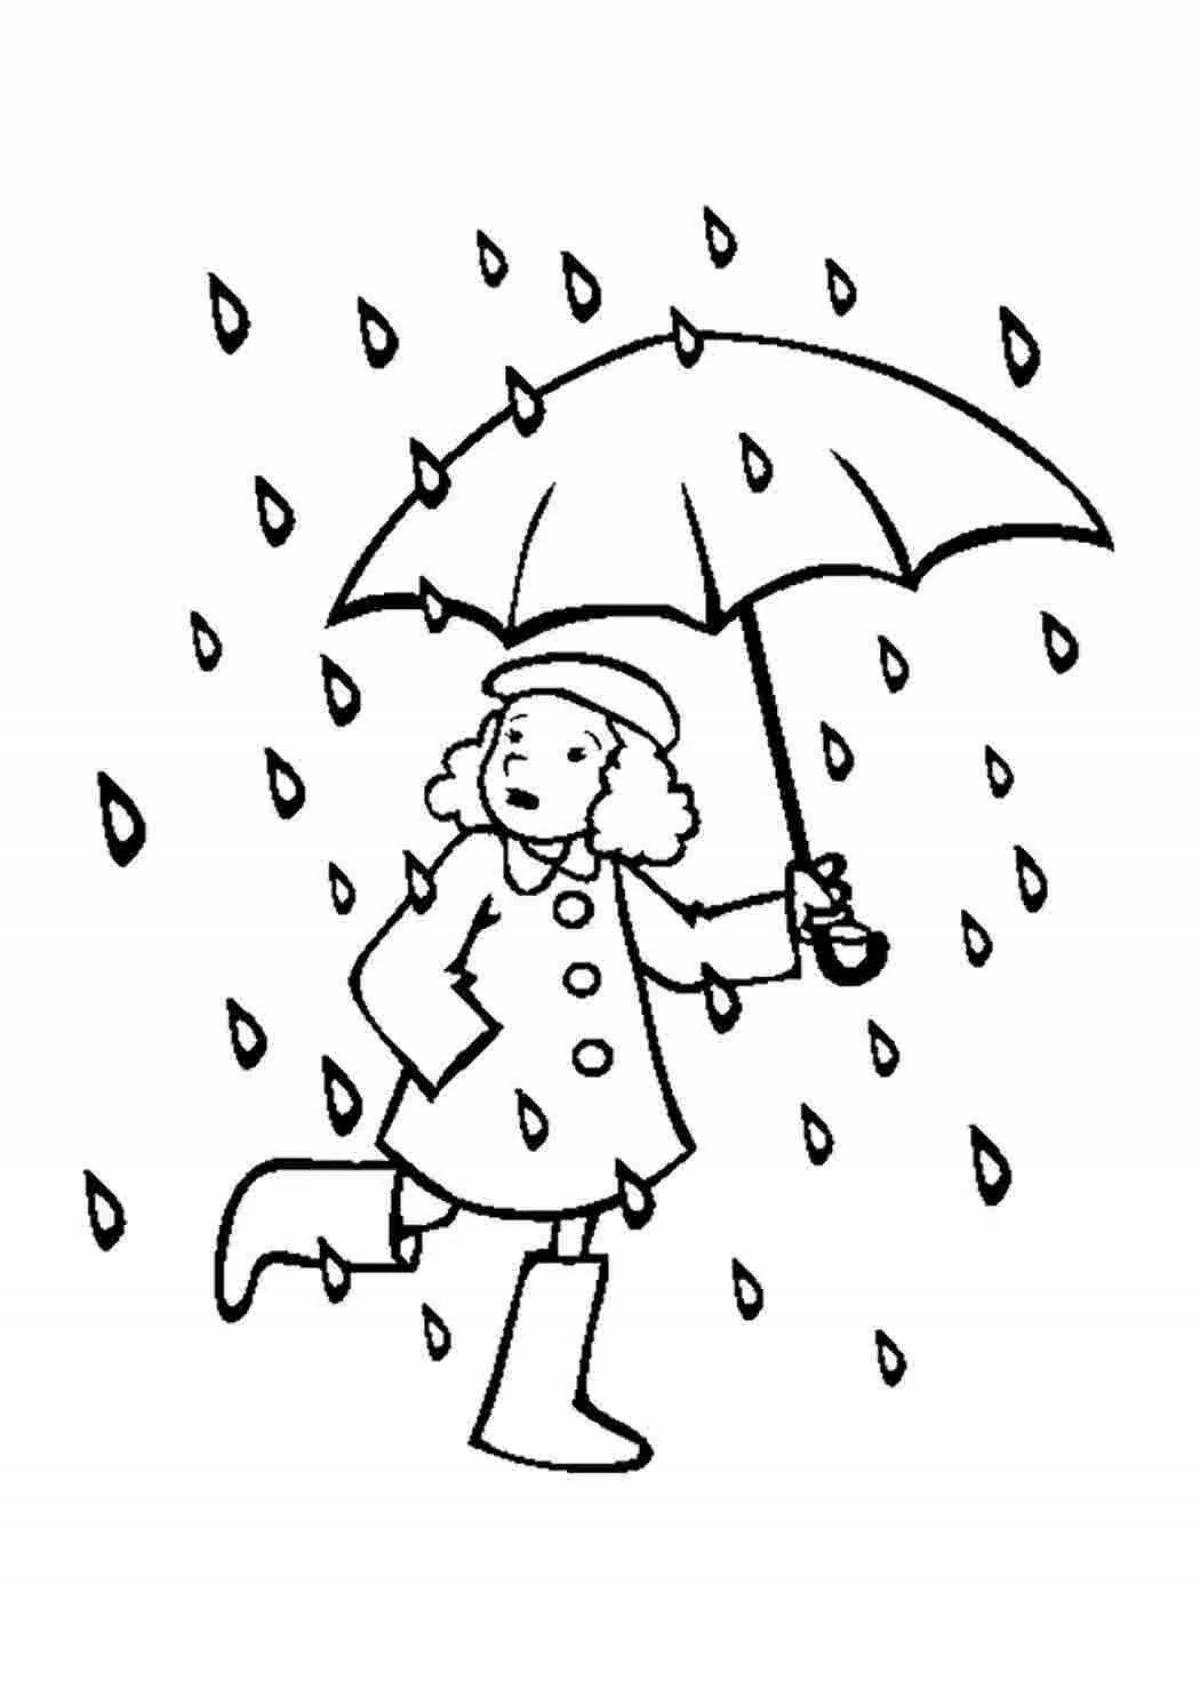 Coloring book joyful rain for children